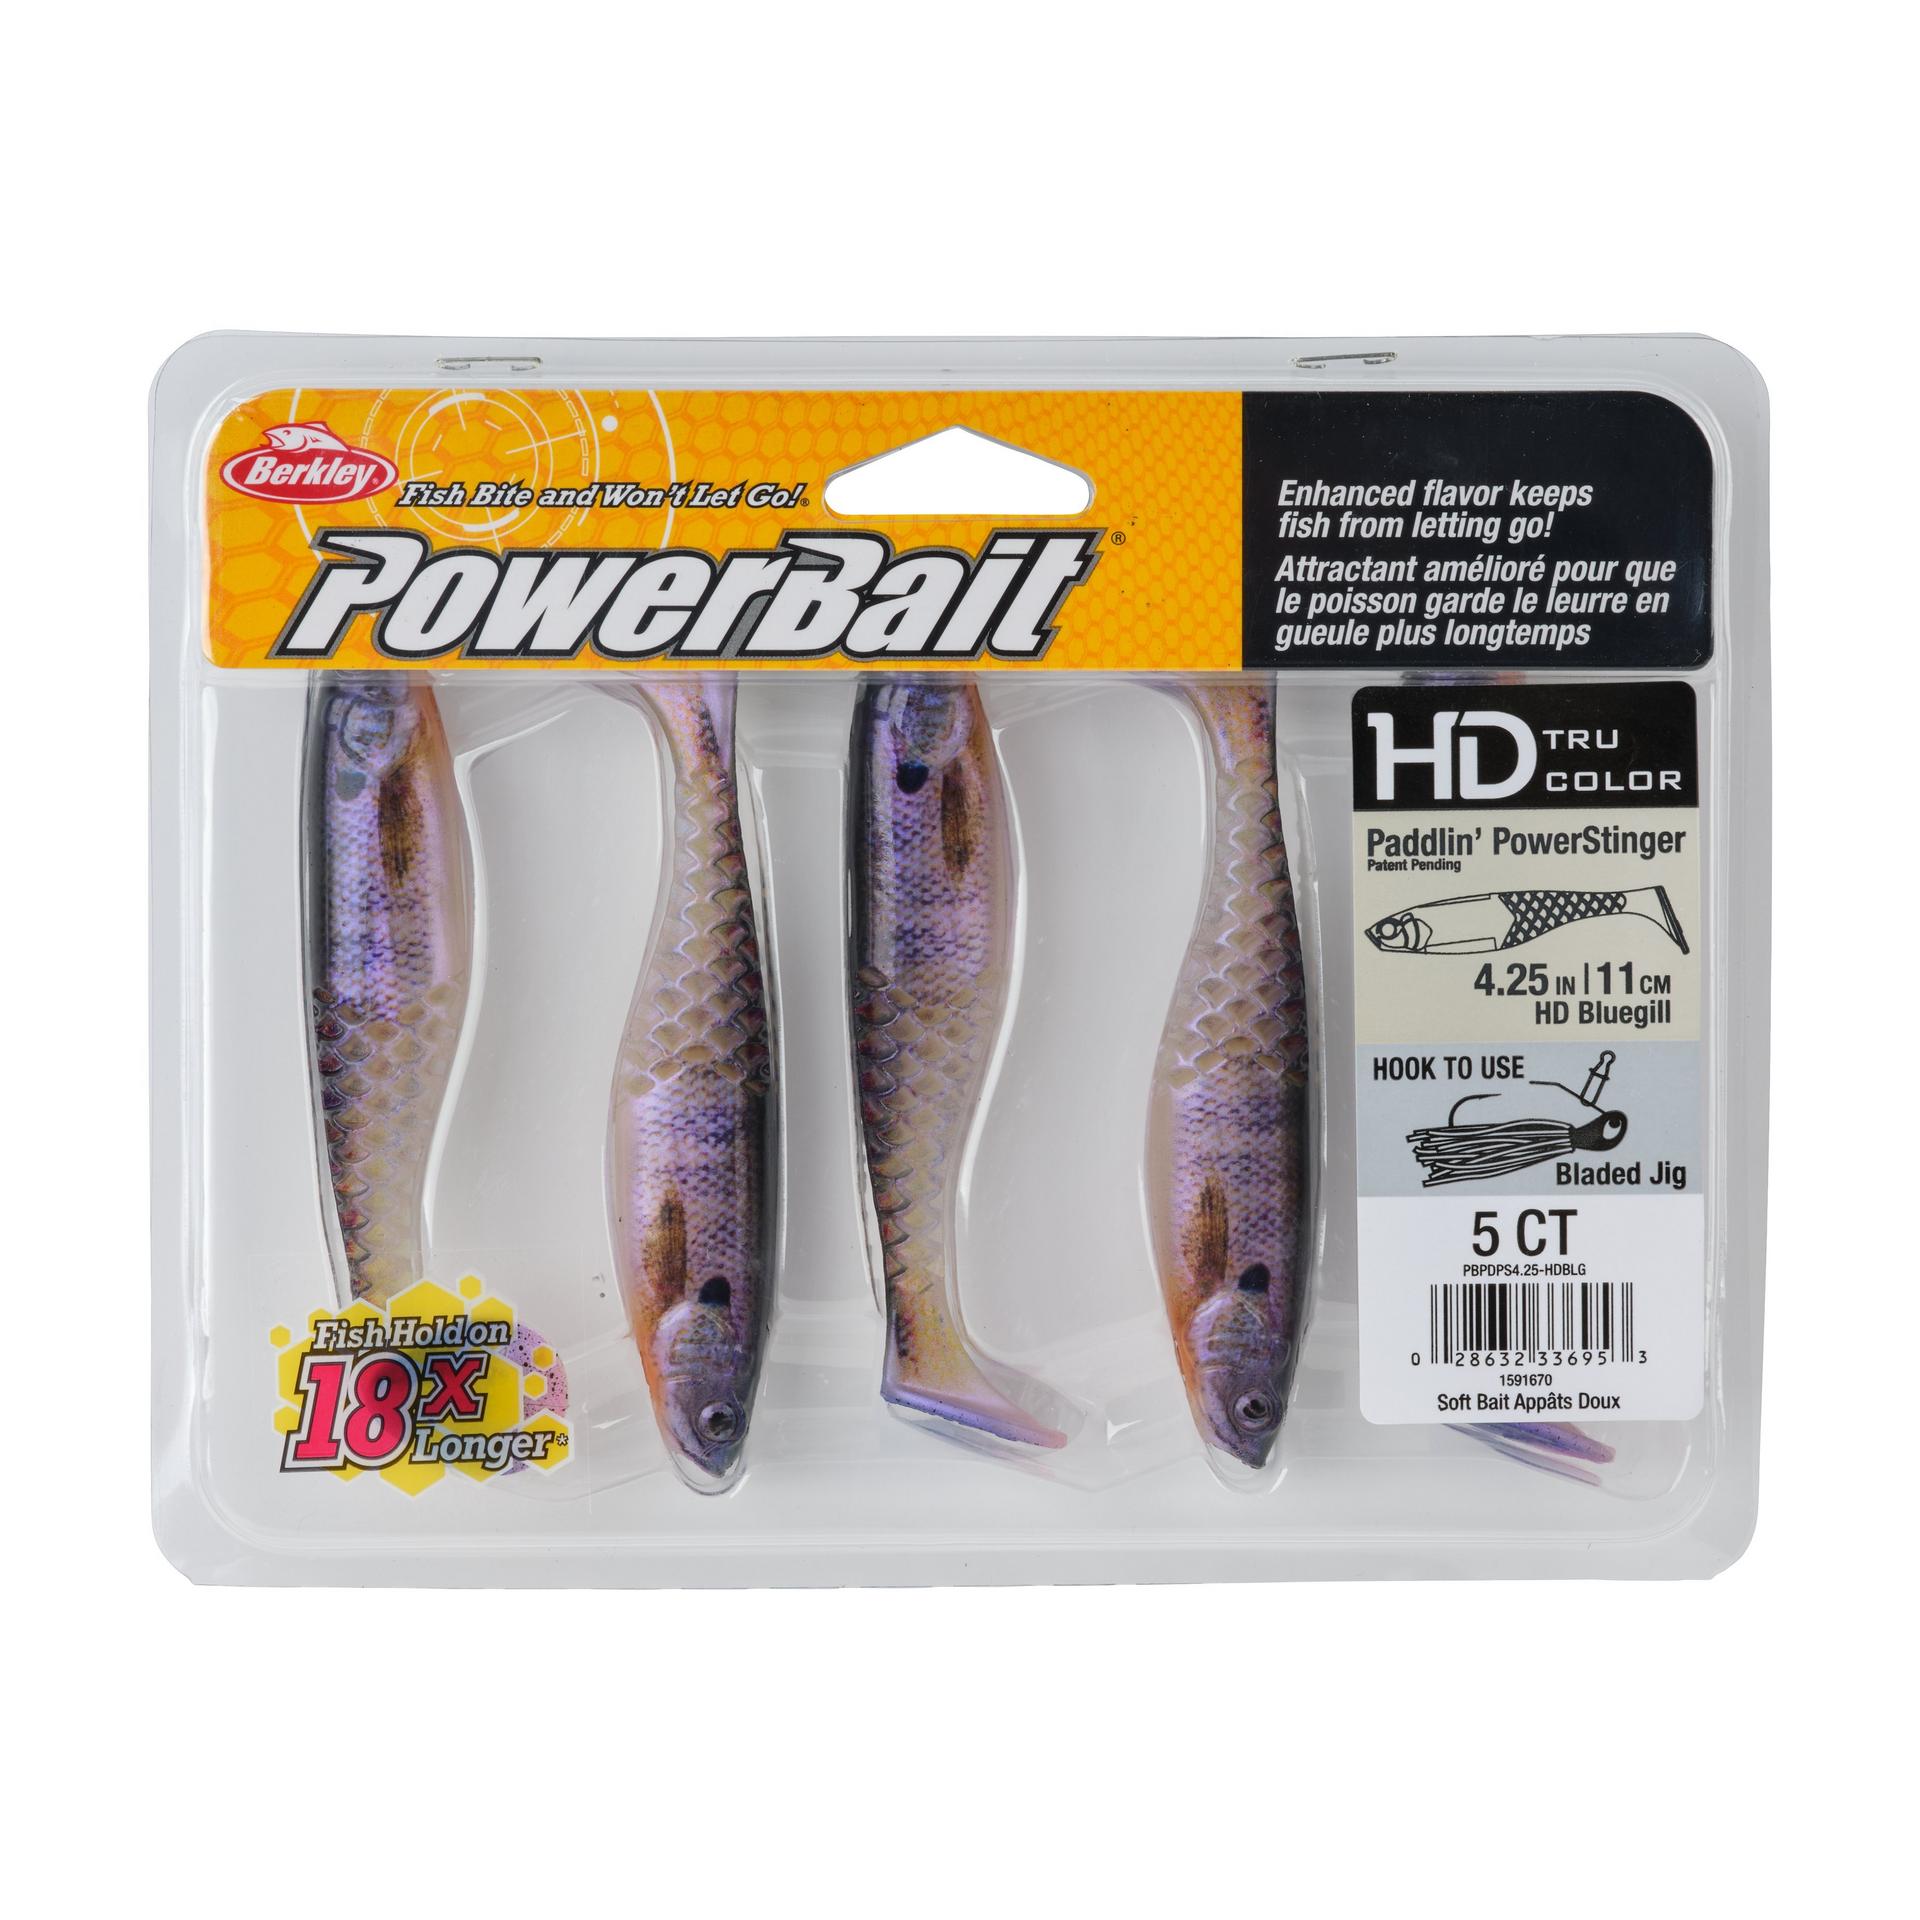 Berkley PowerBaitPaddlinPowerStinger HDBluegill 4.25in PKG | Berkley Fishing